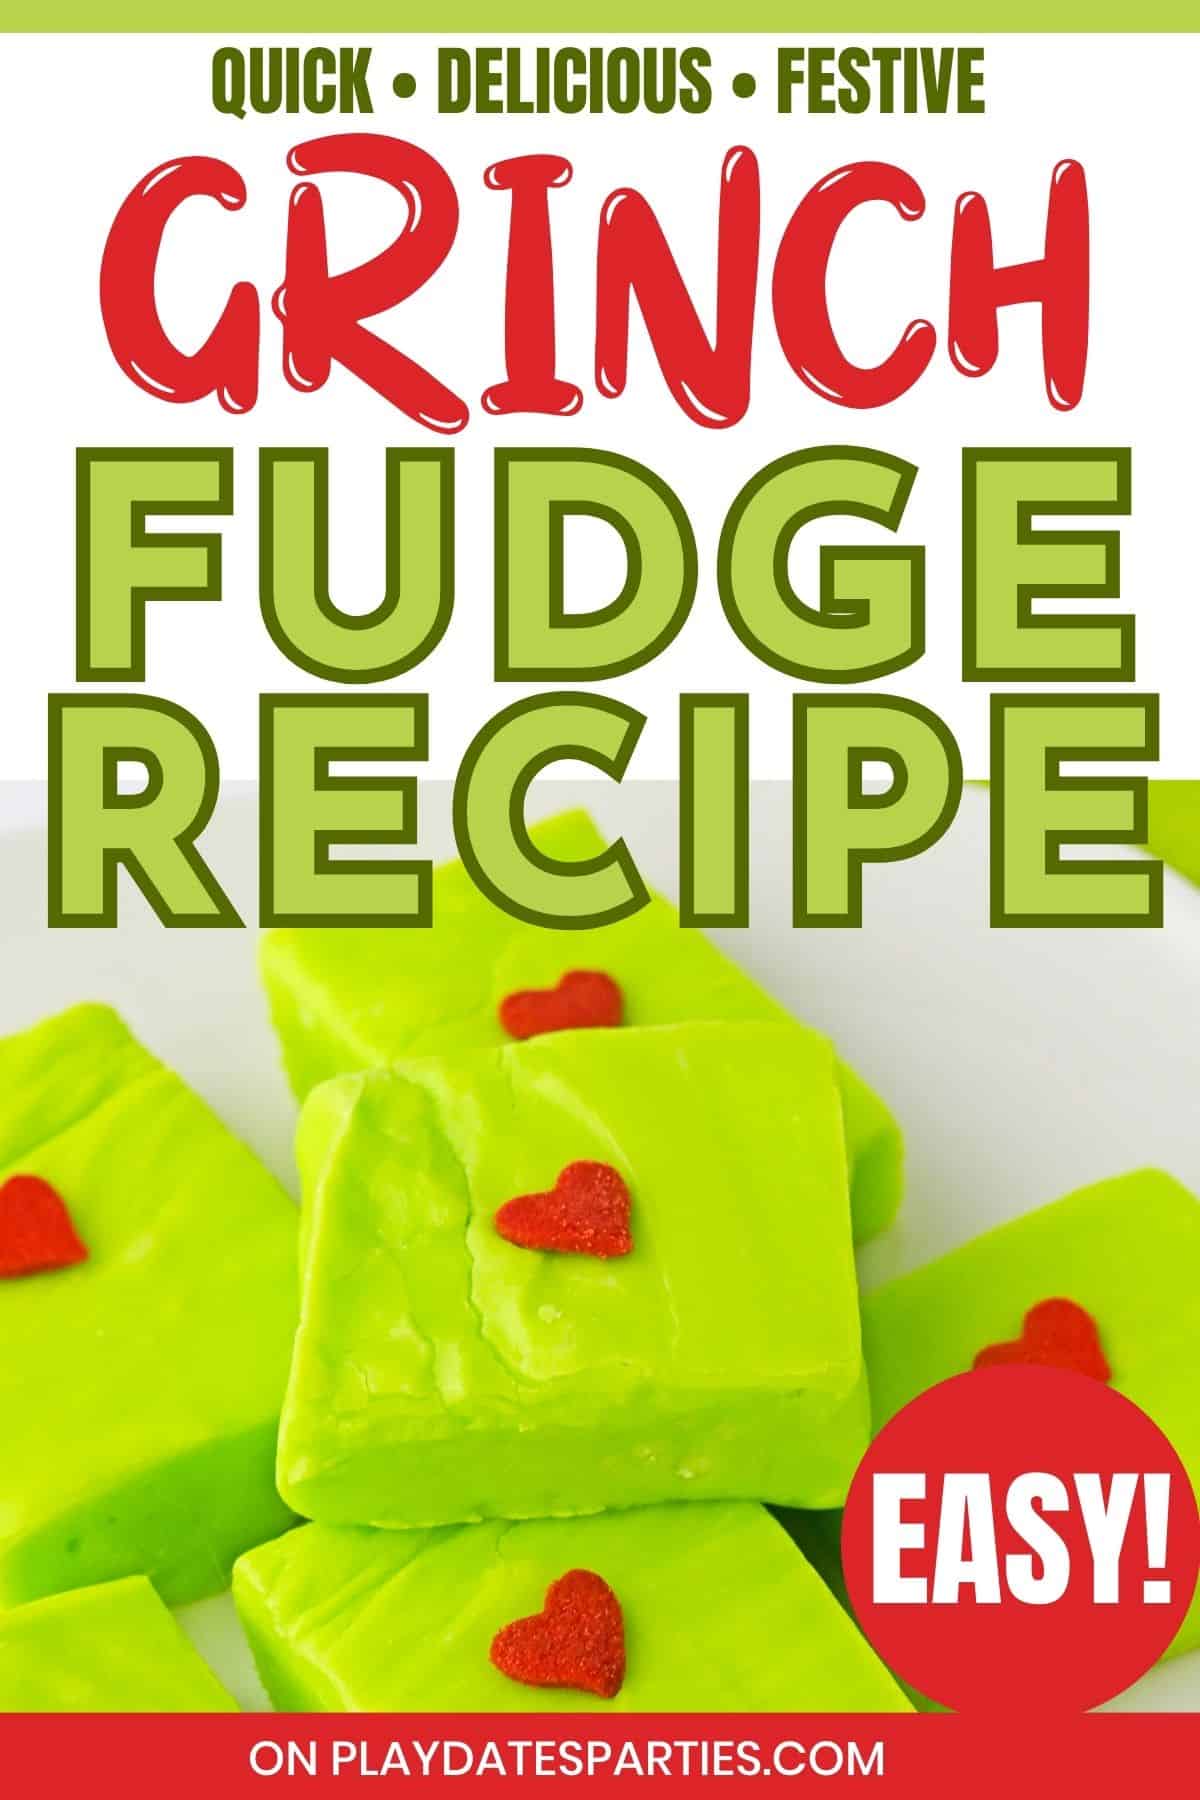 Easy Grinch Fudge Recipe pin image.